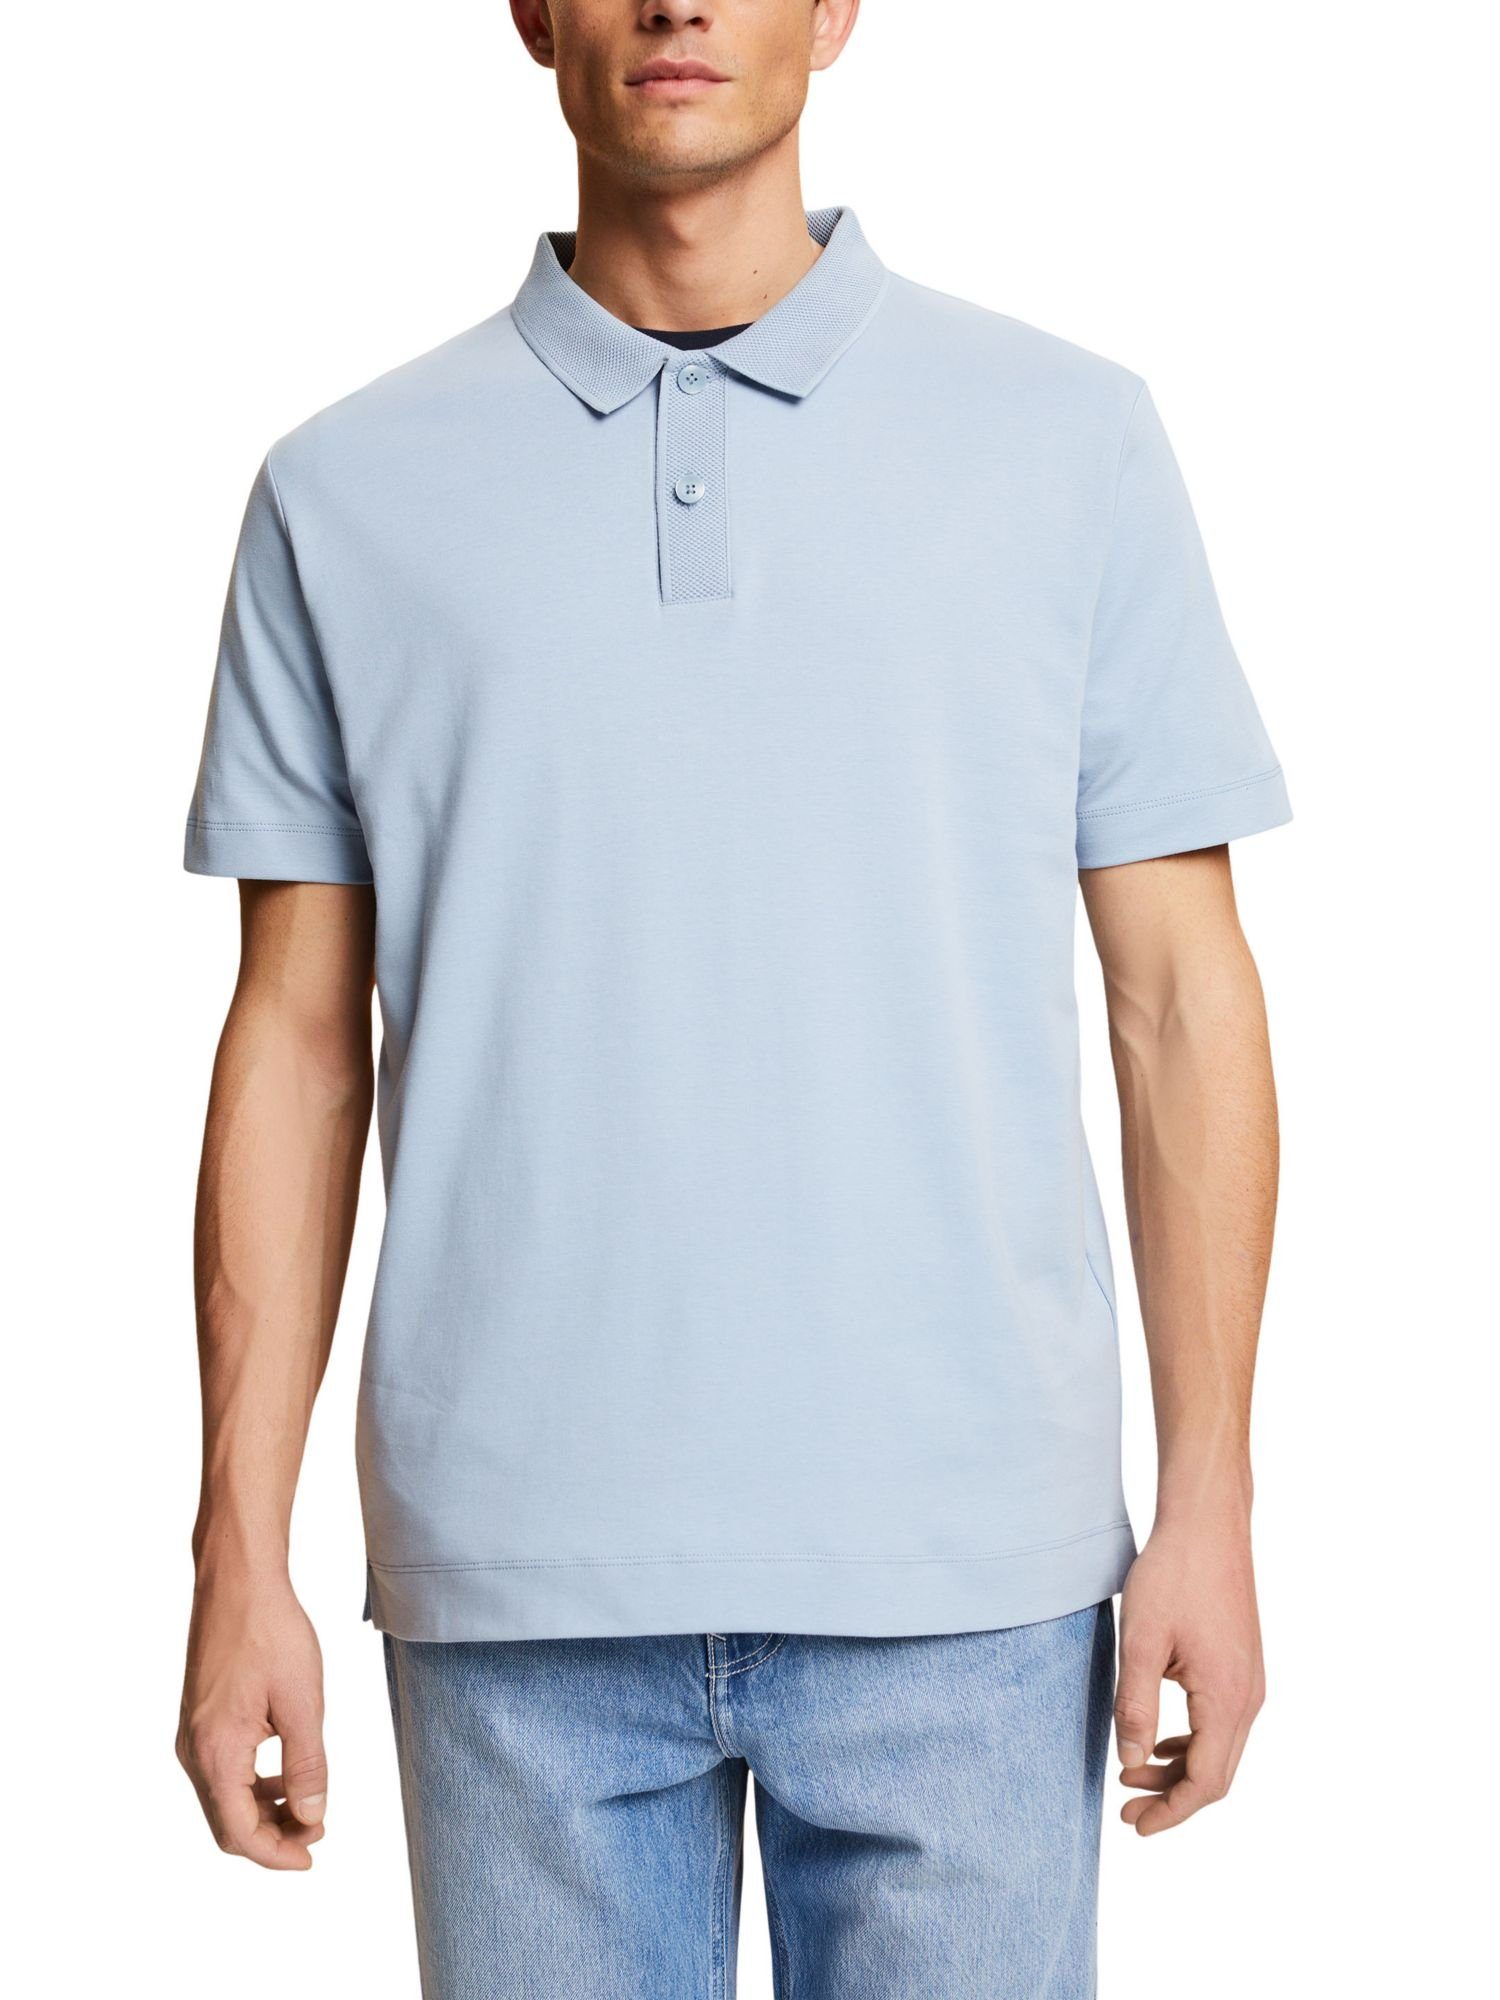 Esprit Collection Poloshirt Pima-Baumwolle BLUE LIGHT LAVENDER aus Poloshirt